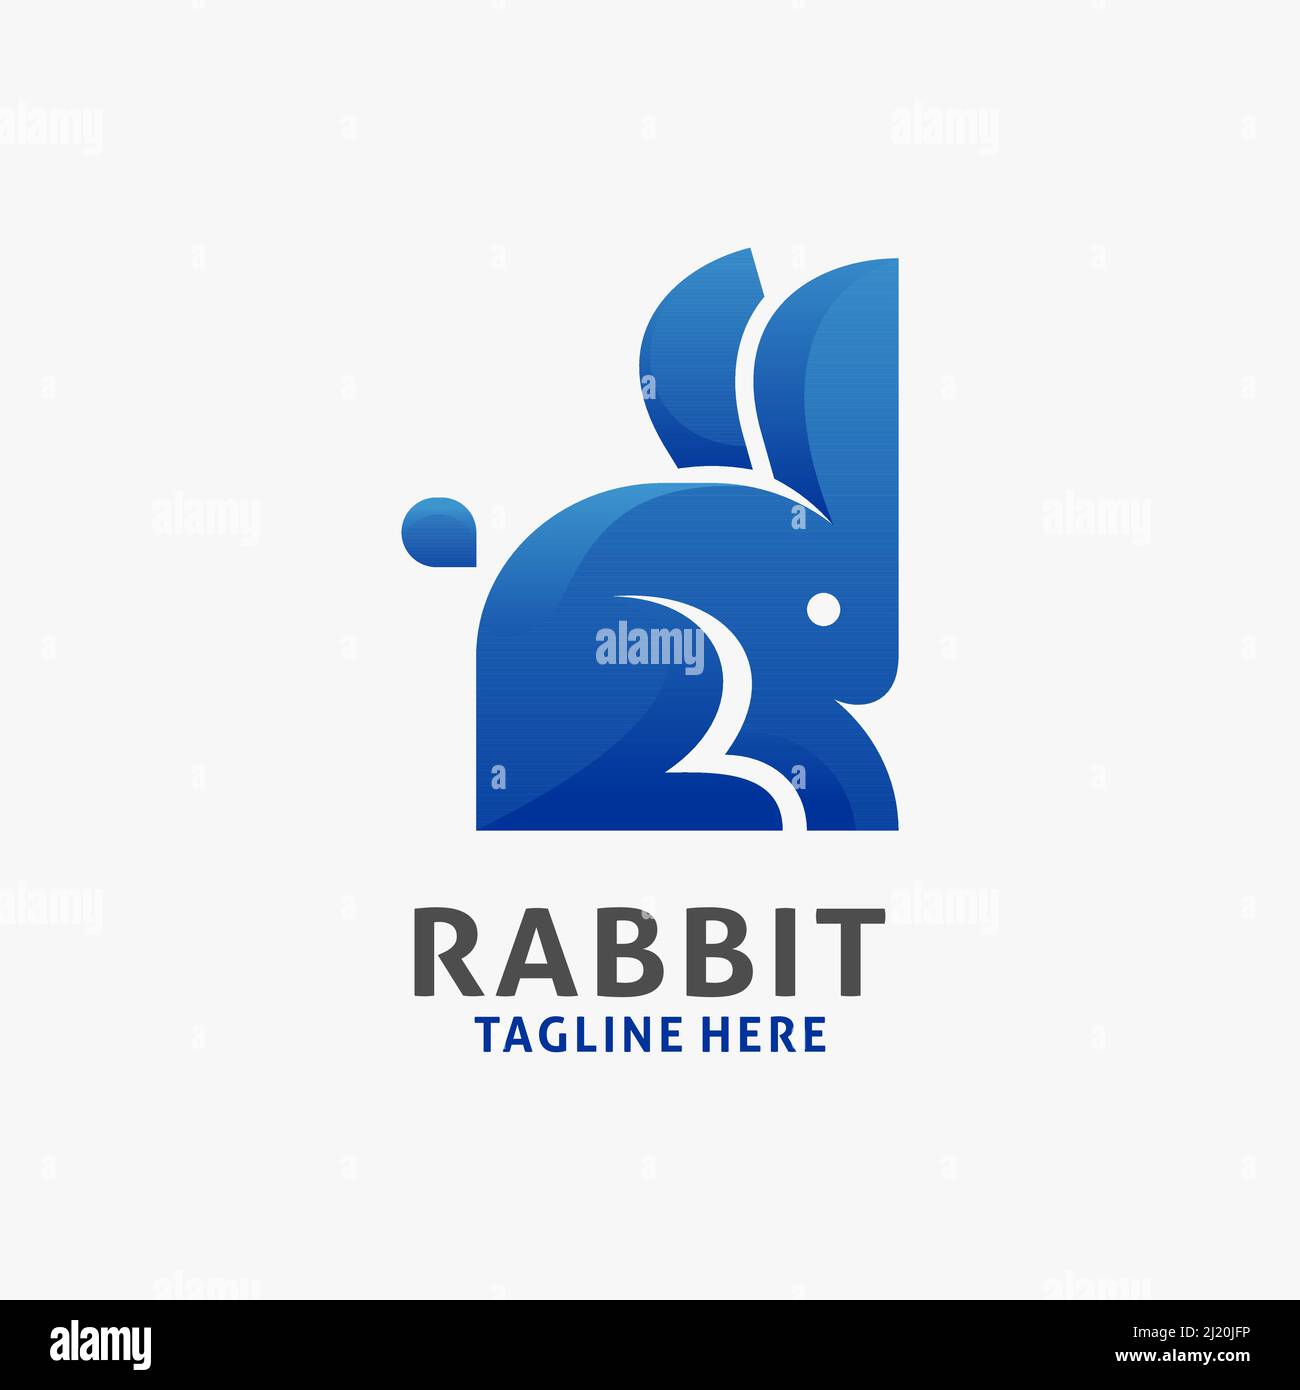 Bunny Logos - 135+ Best Bunny Logo Ideas. Free Bunny Logo Maker. | 99designs